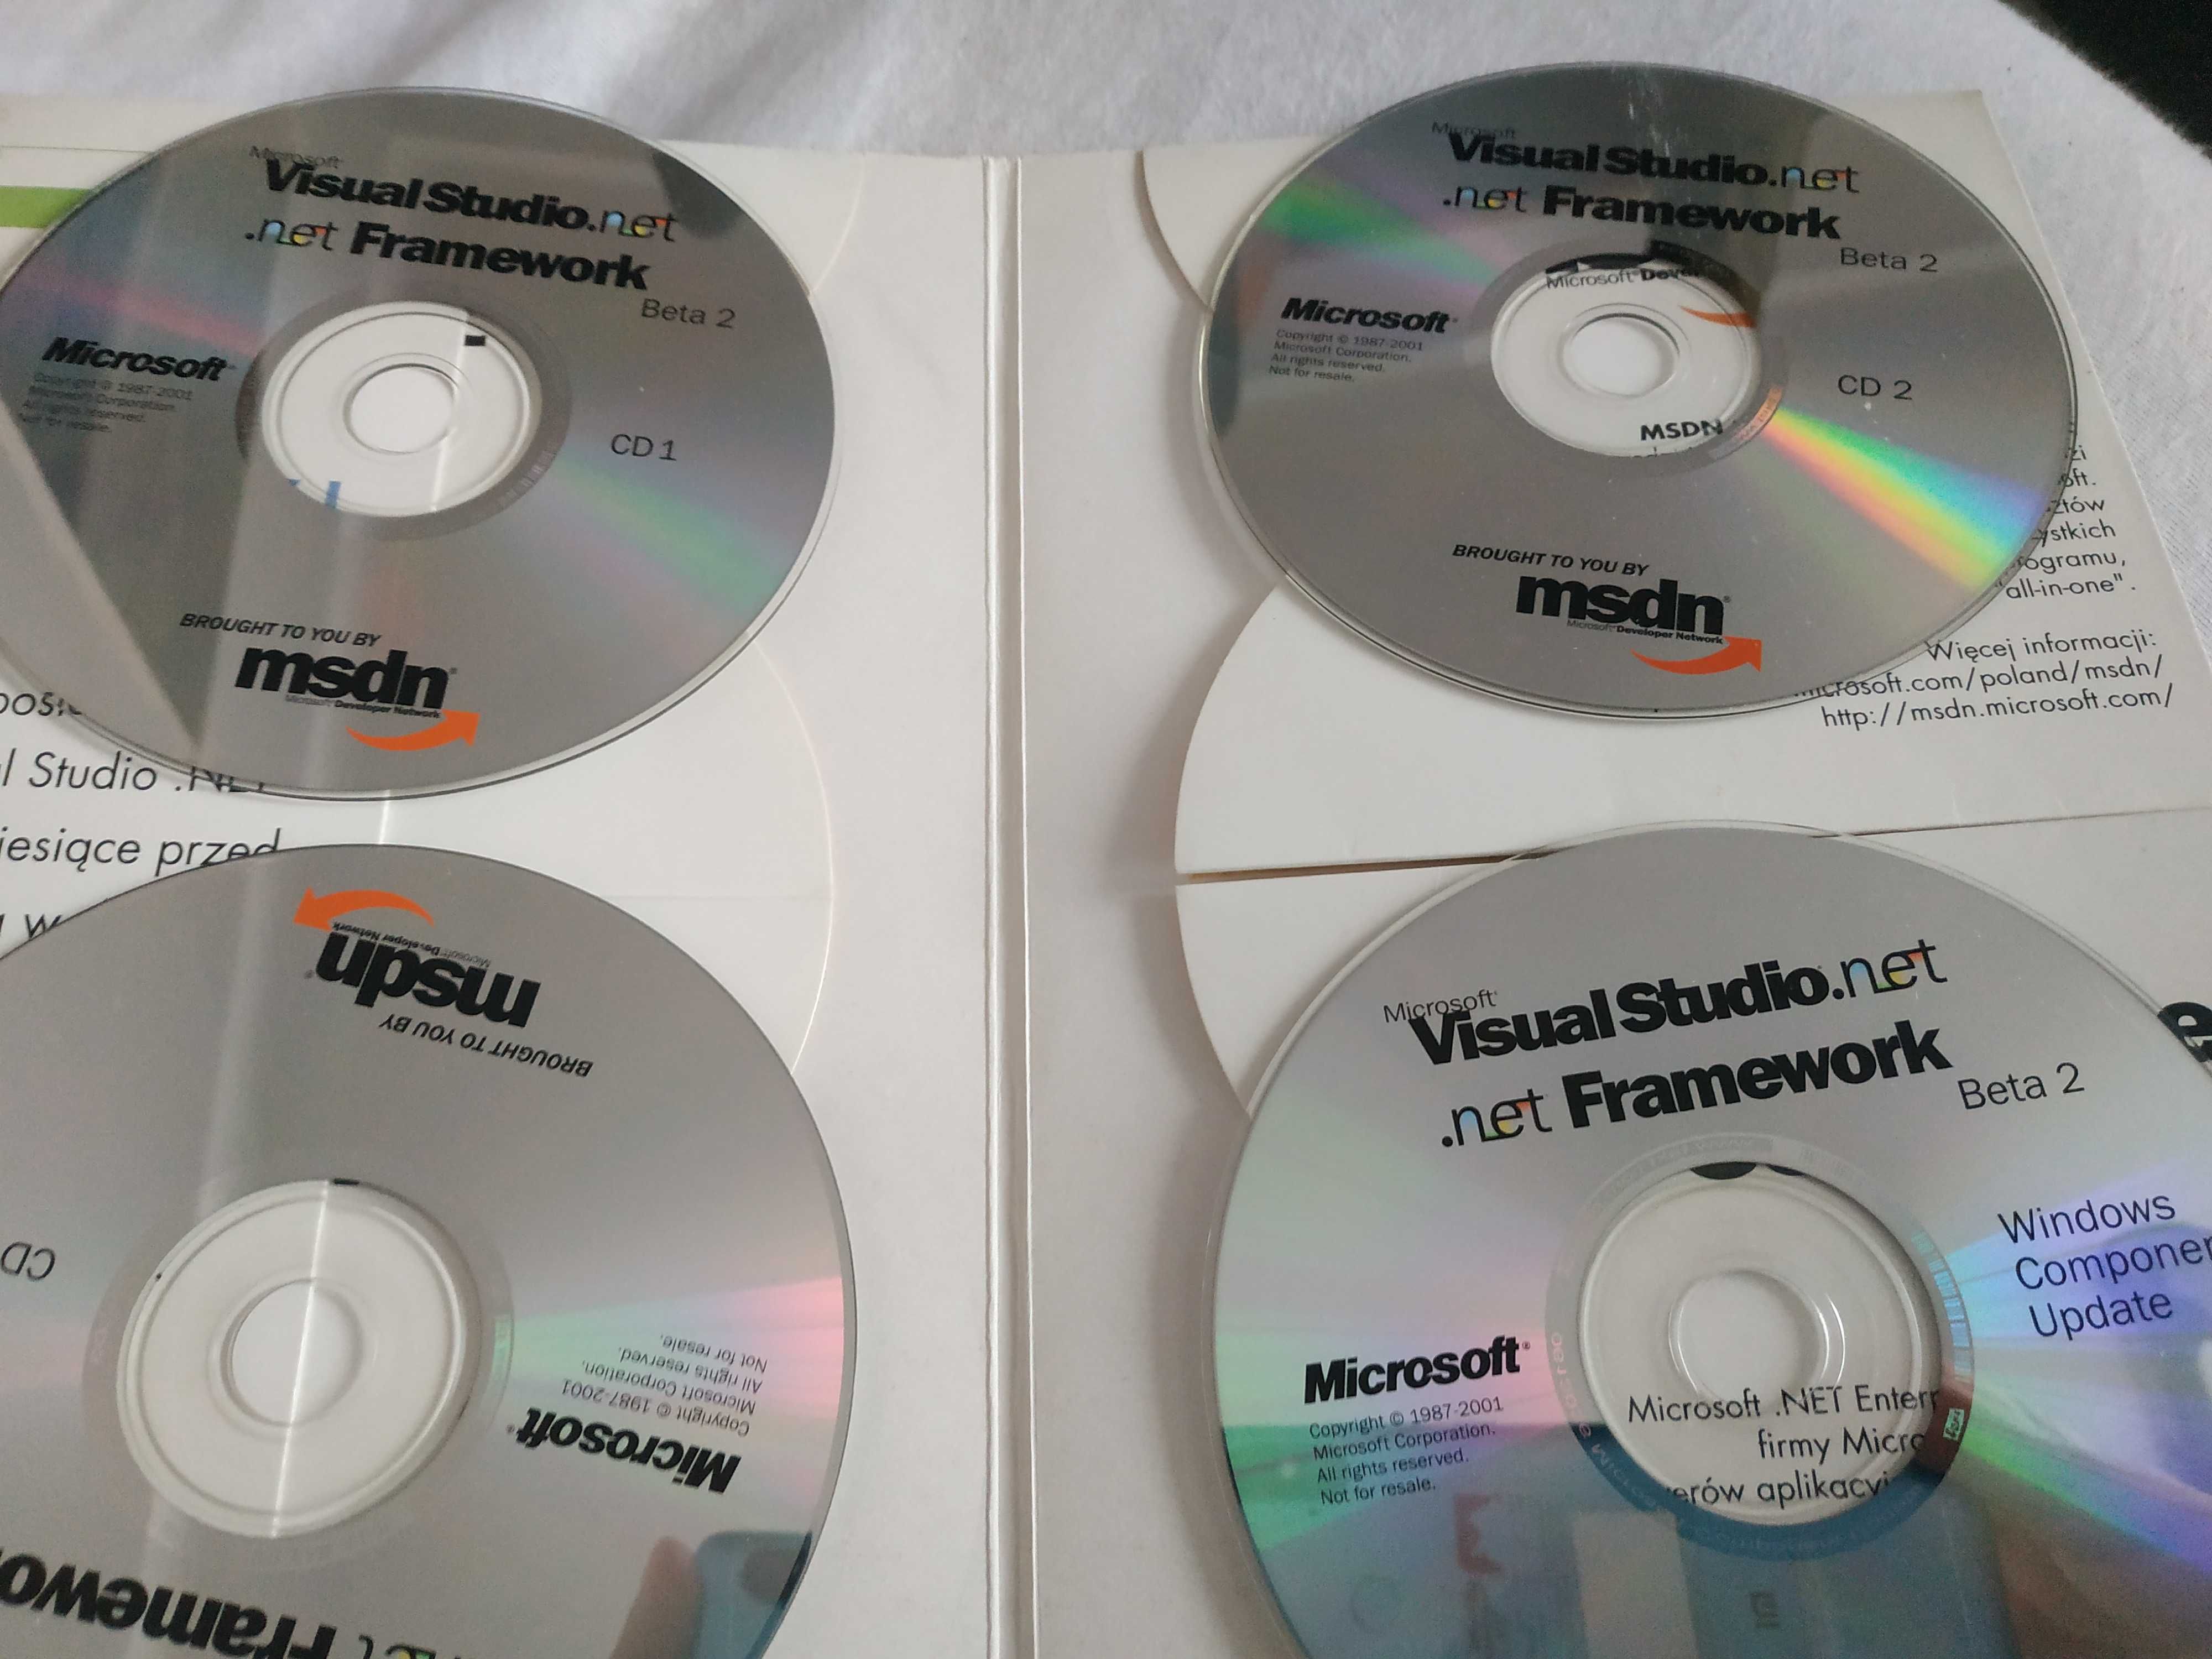 Microsoft VisualStudio.net Framework, beta 2